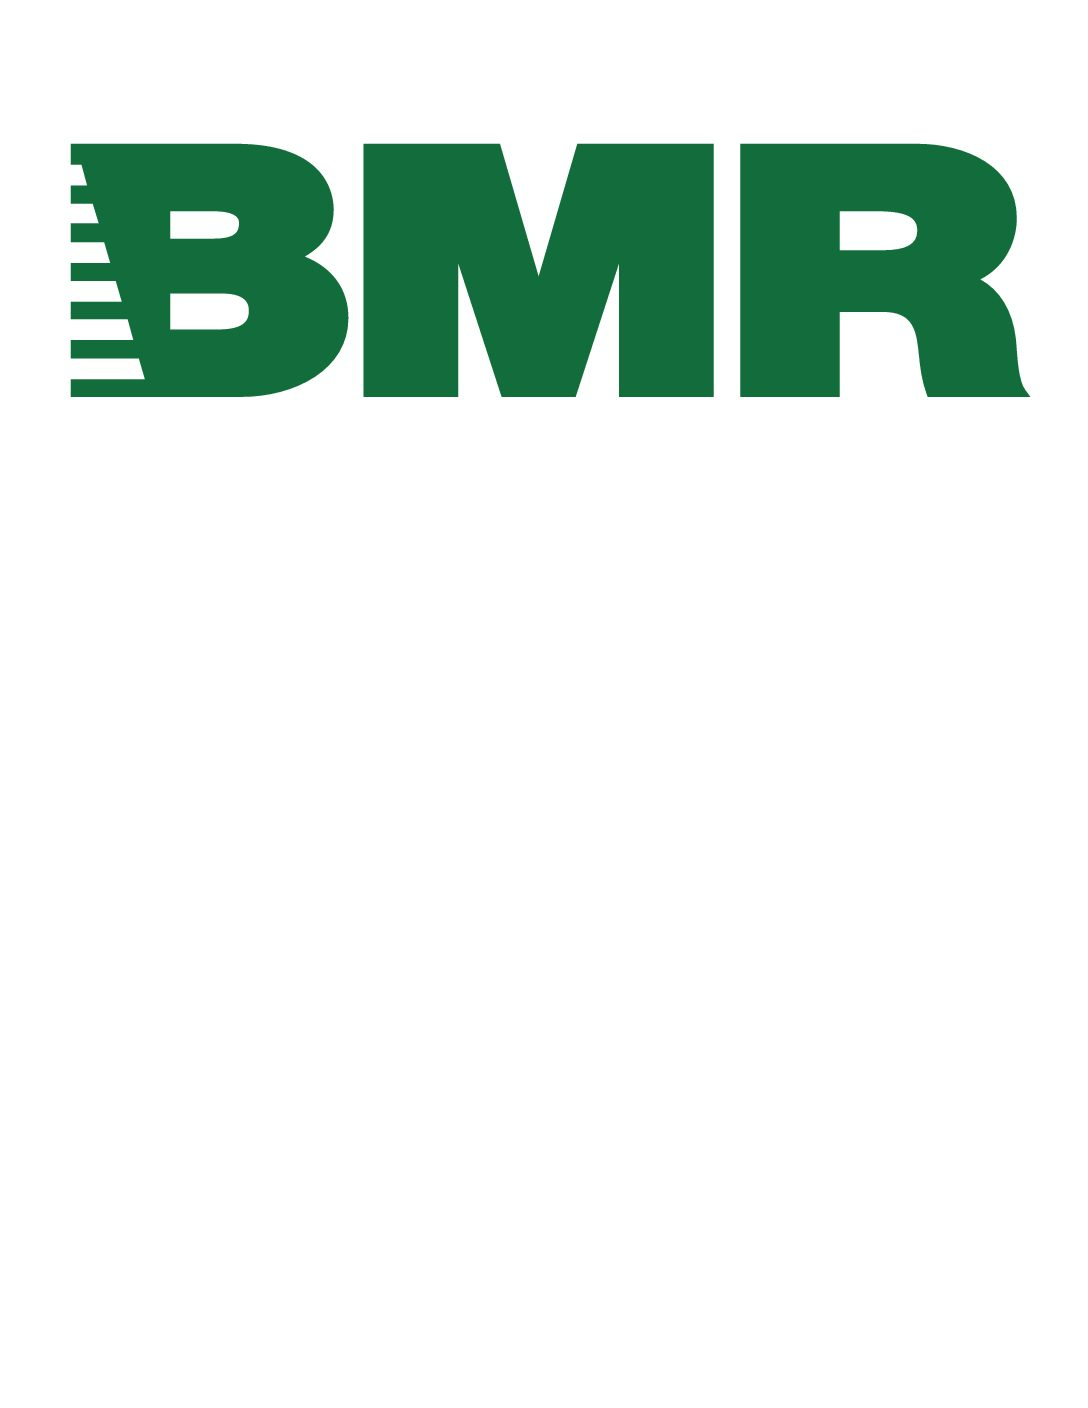 BMR Detailing (@bmrdetailing) • Instagram photos and videos